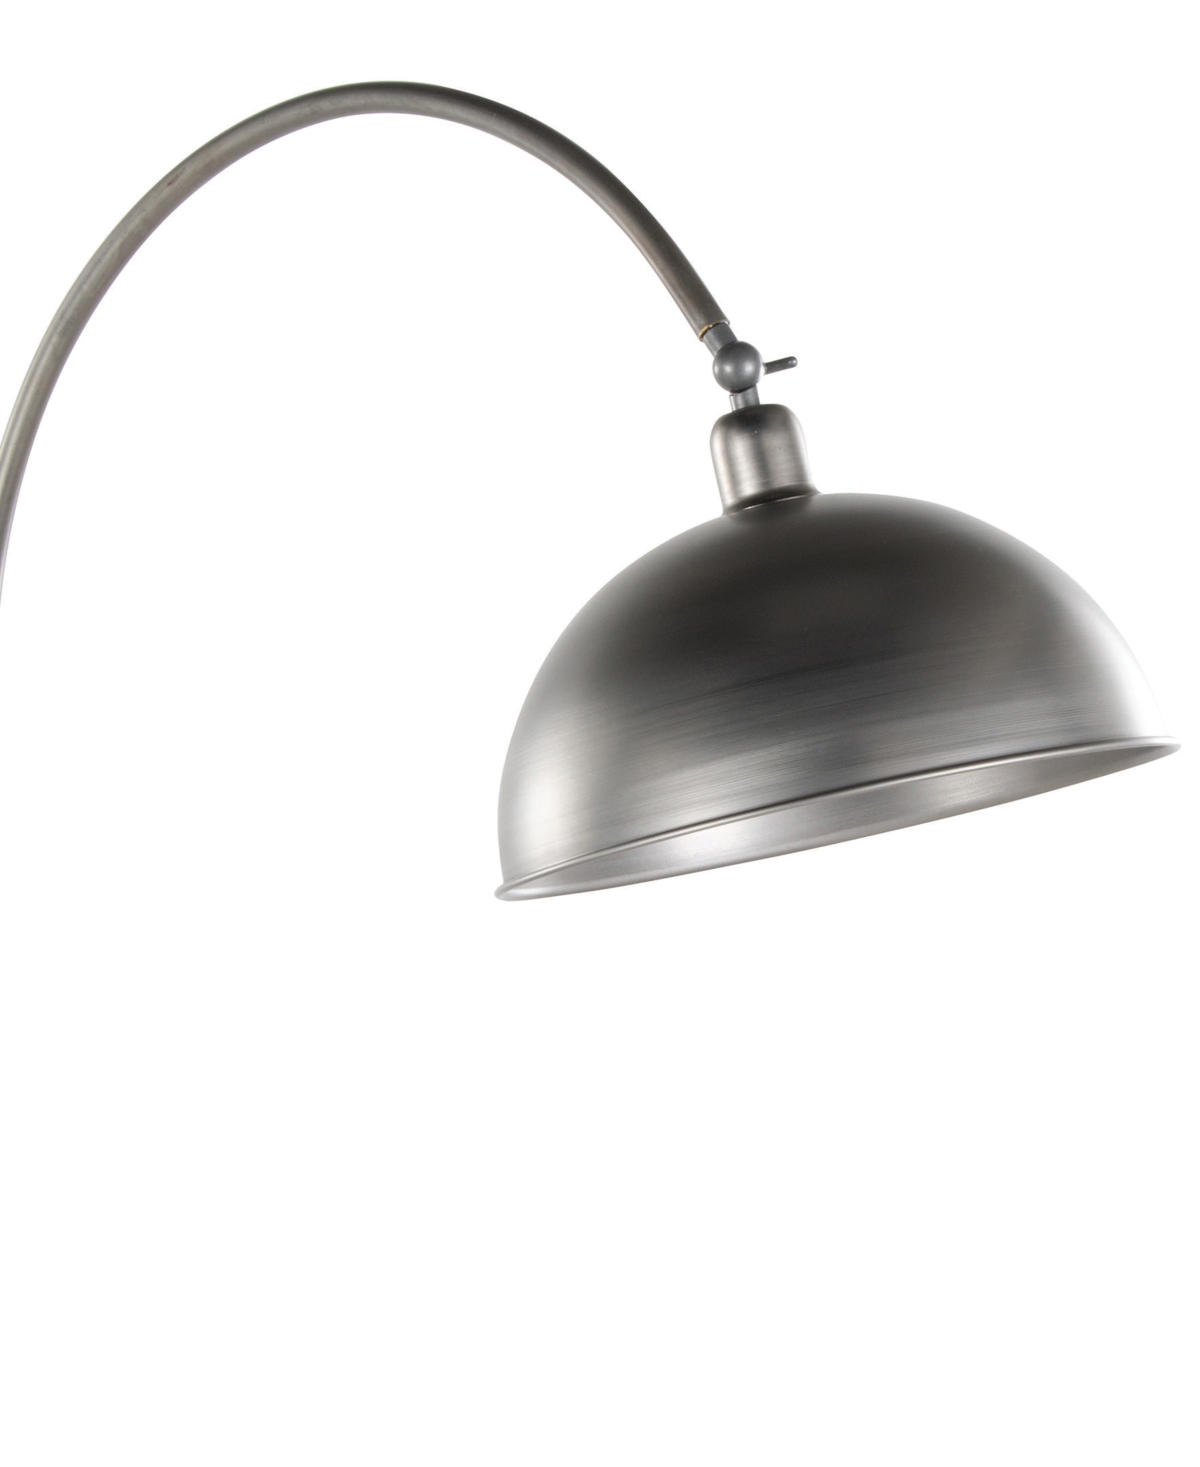 Shop Lumisource Emery 63.5" Metal Floor Lamp In Pewter